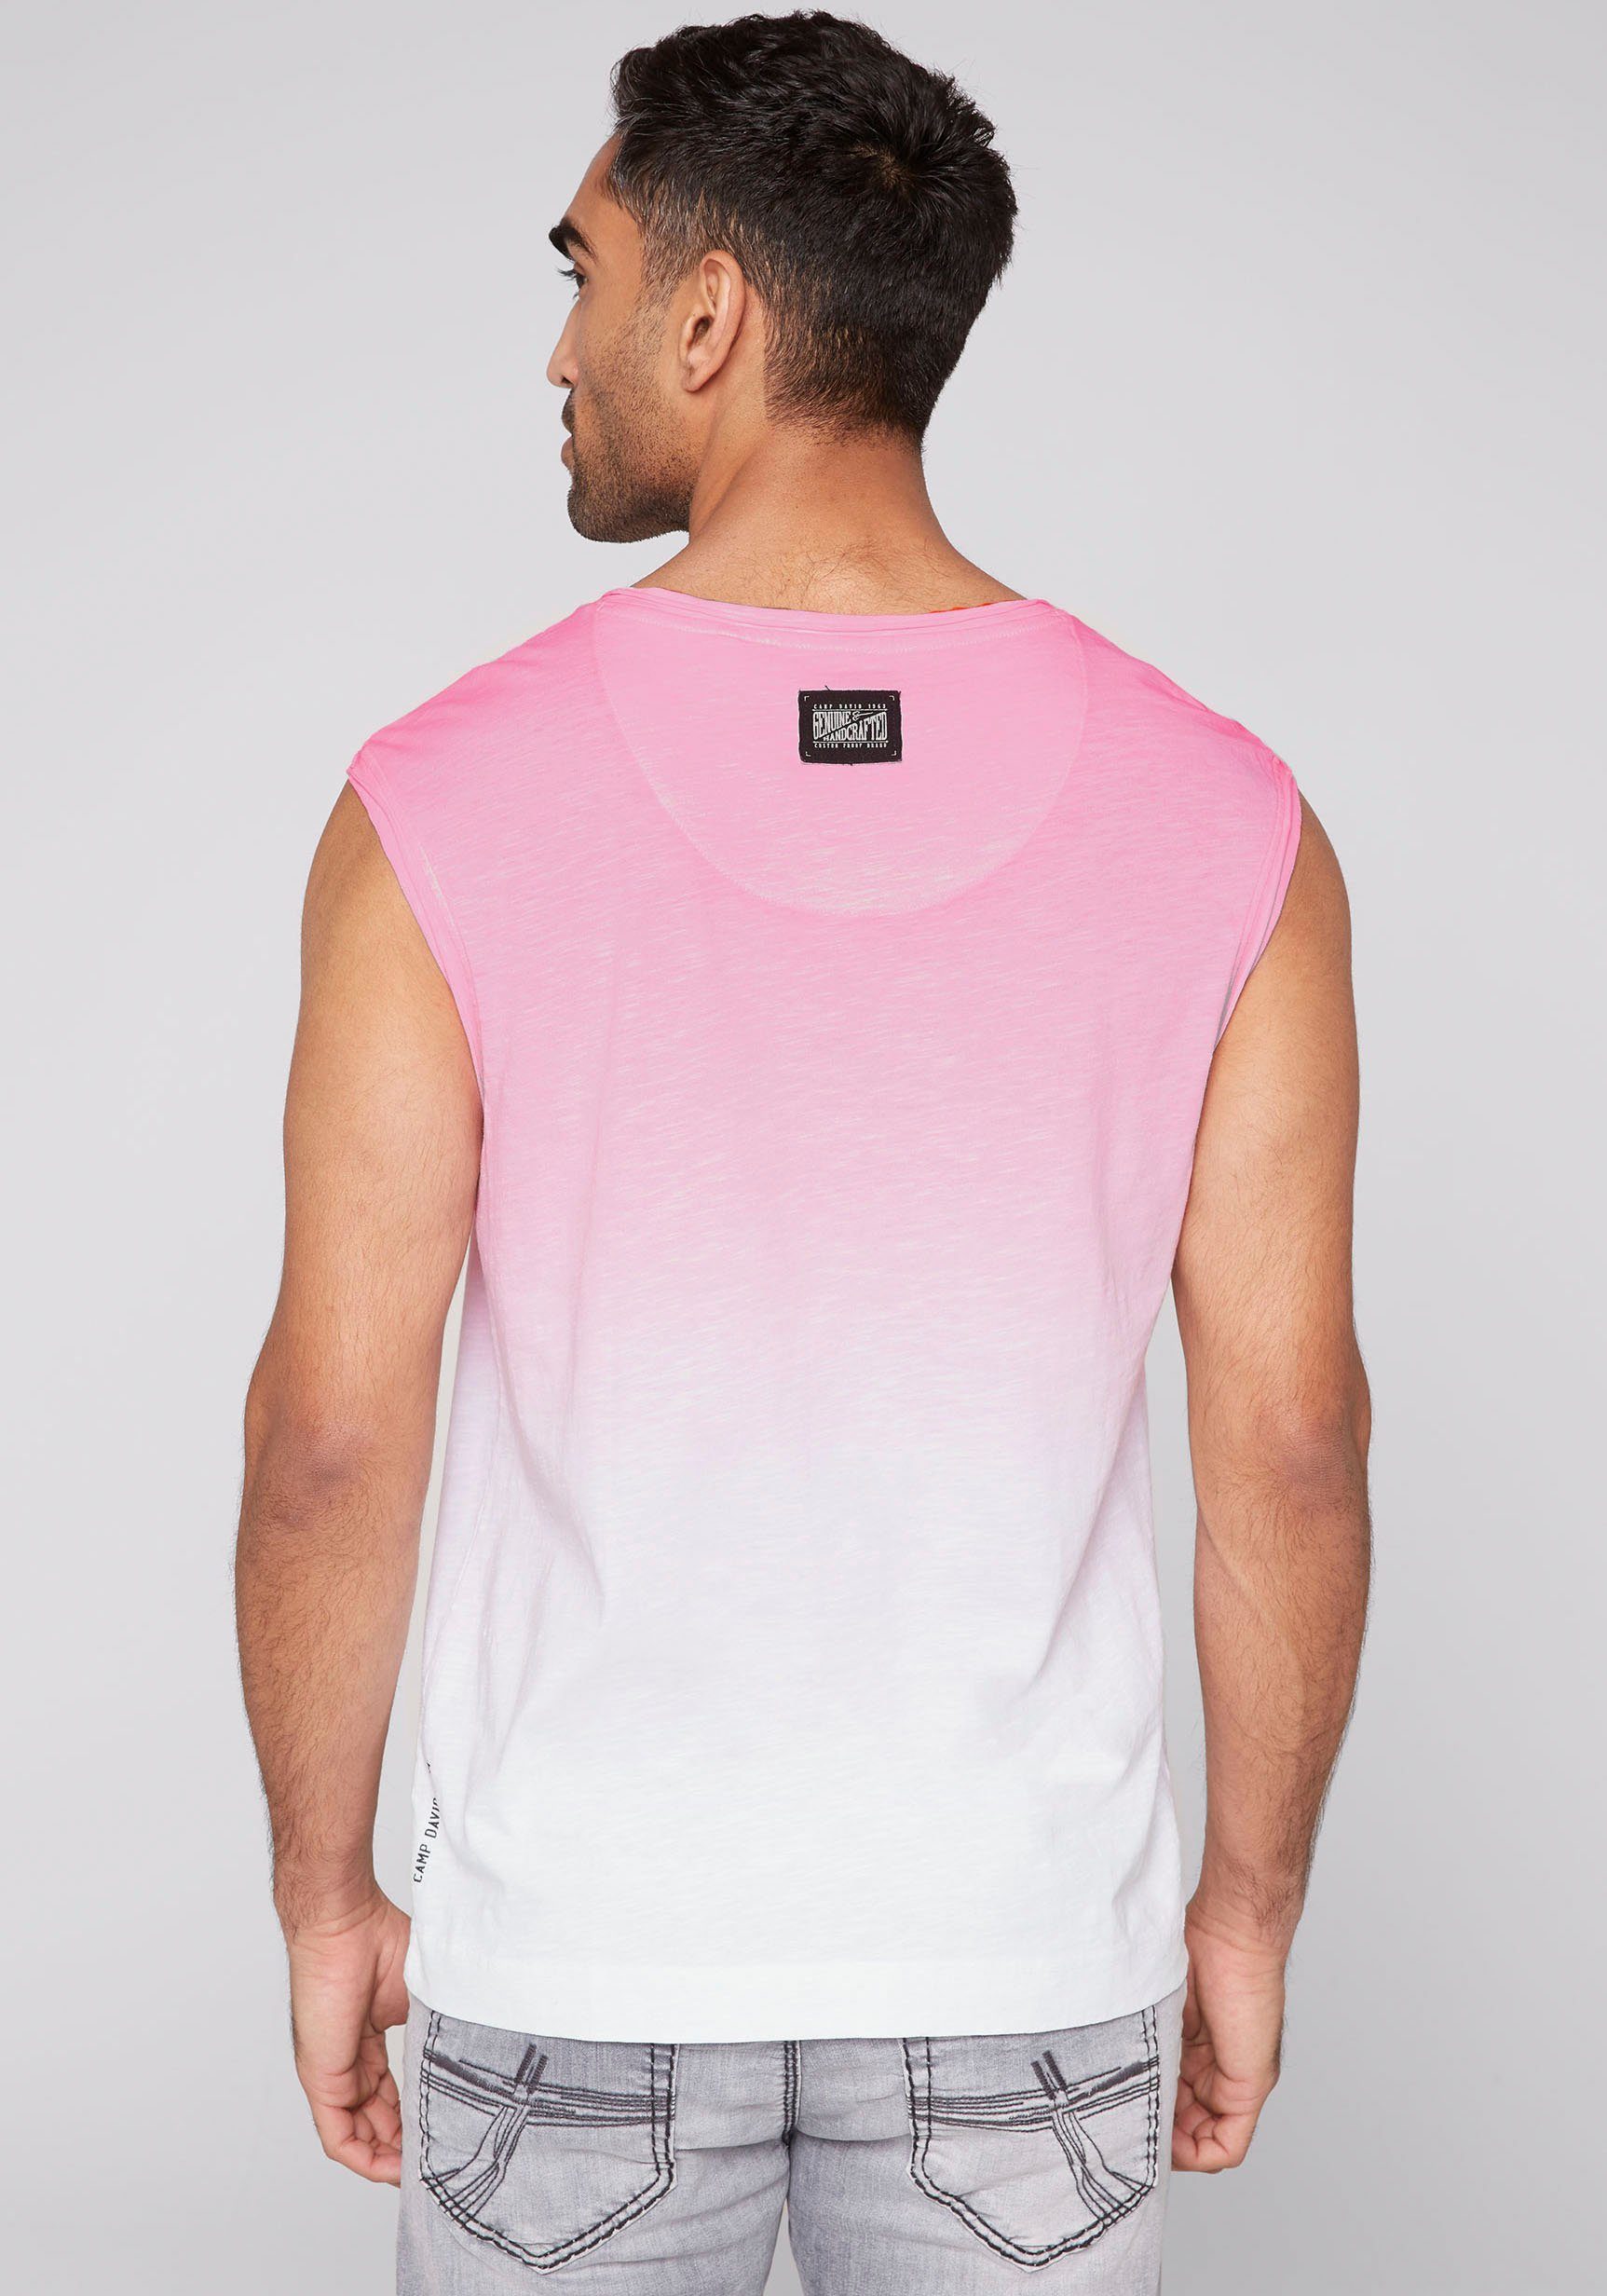 V-Shirt DAVID CAMP / neon opticwhite pink